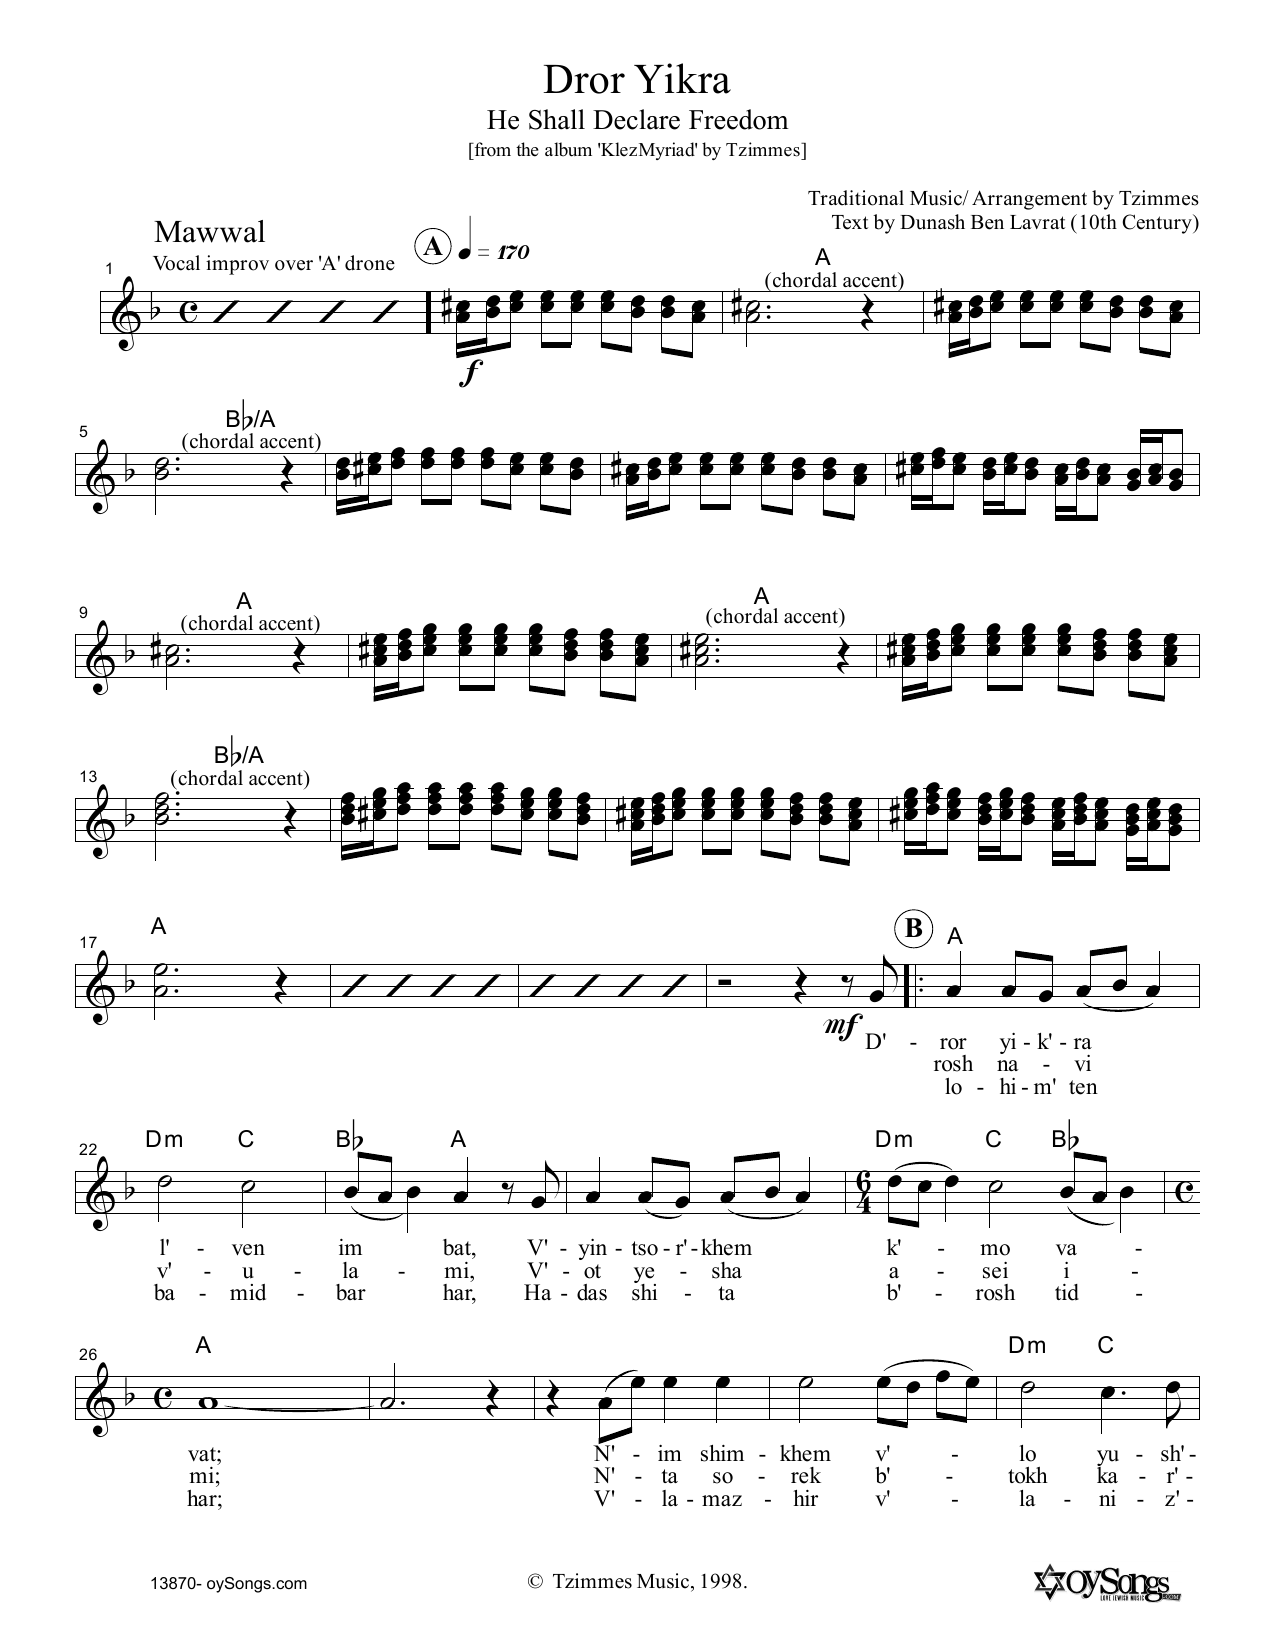 Moshe Denburg Dror Yikra Sheet Music Notes & Chords for Melody Line, Lyrics & Chords - Download or Print PDF